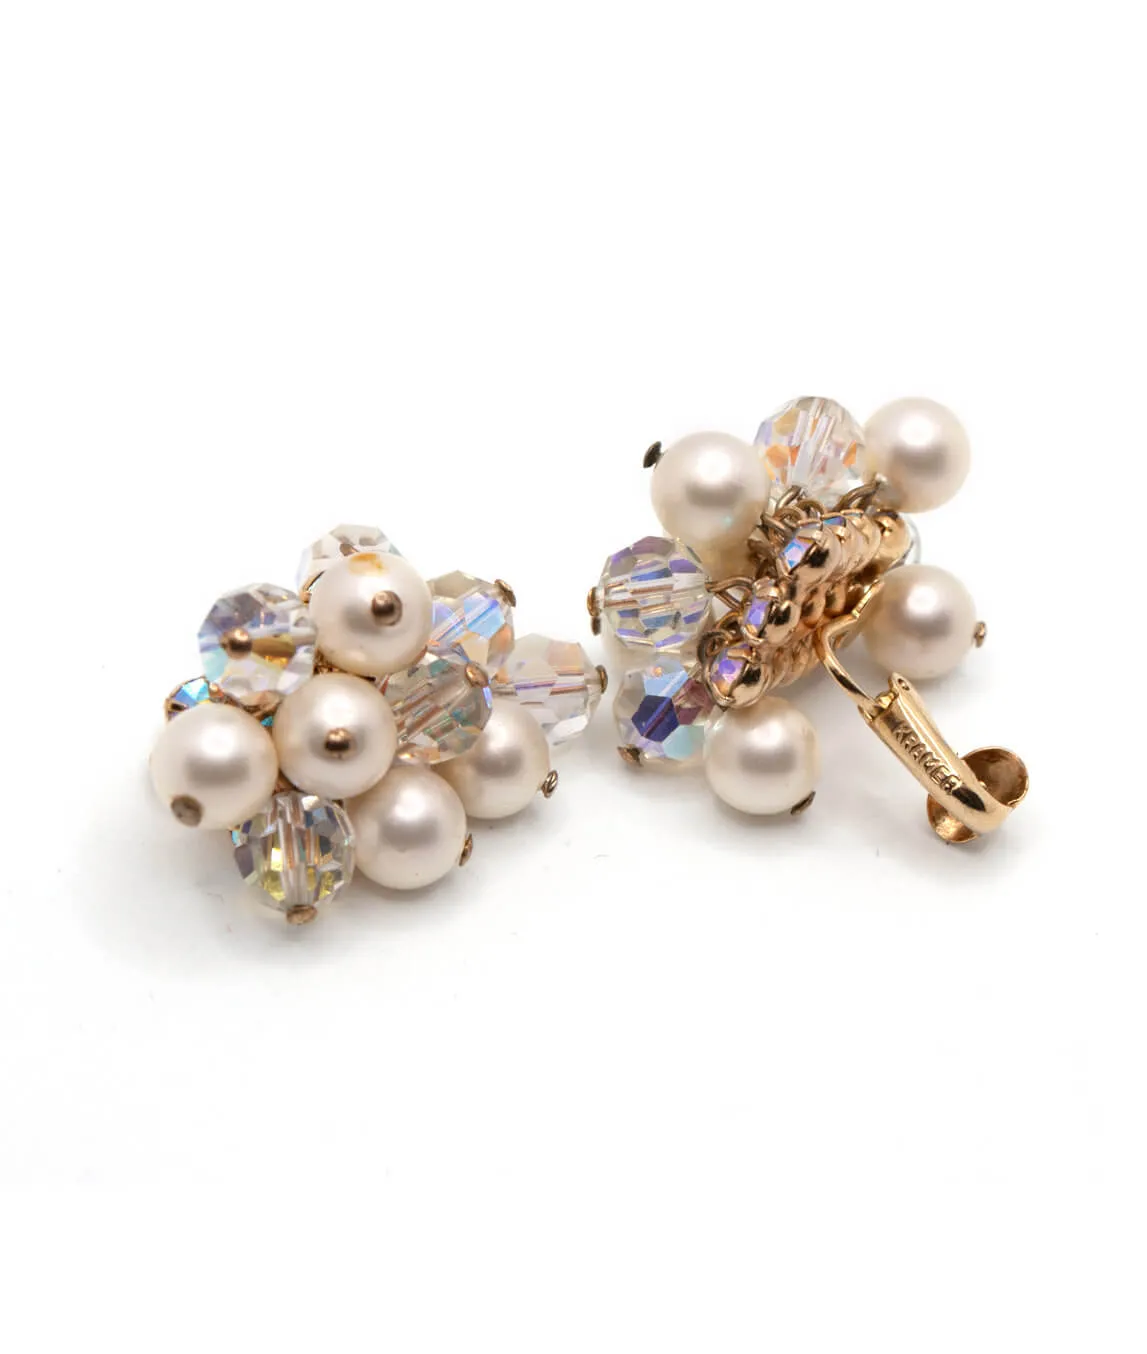 Kramer Multi-Stone Brooch with Faux Pearls - The Jewelry Stylist